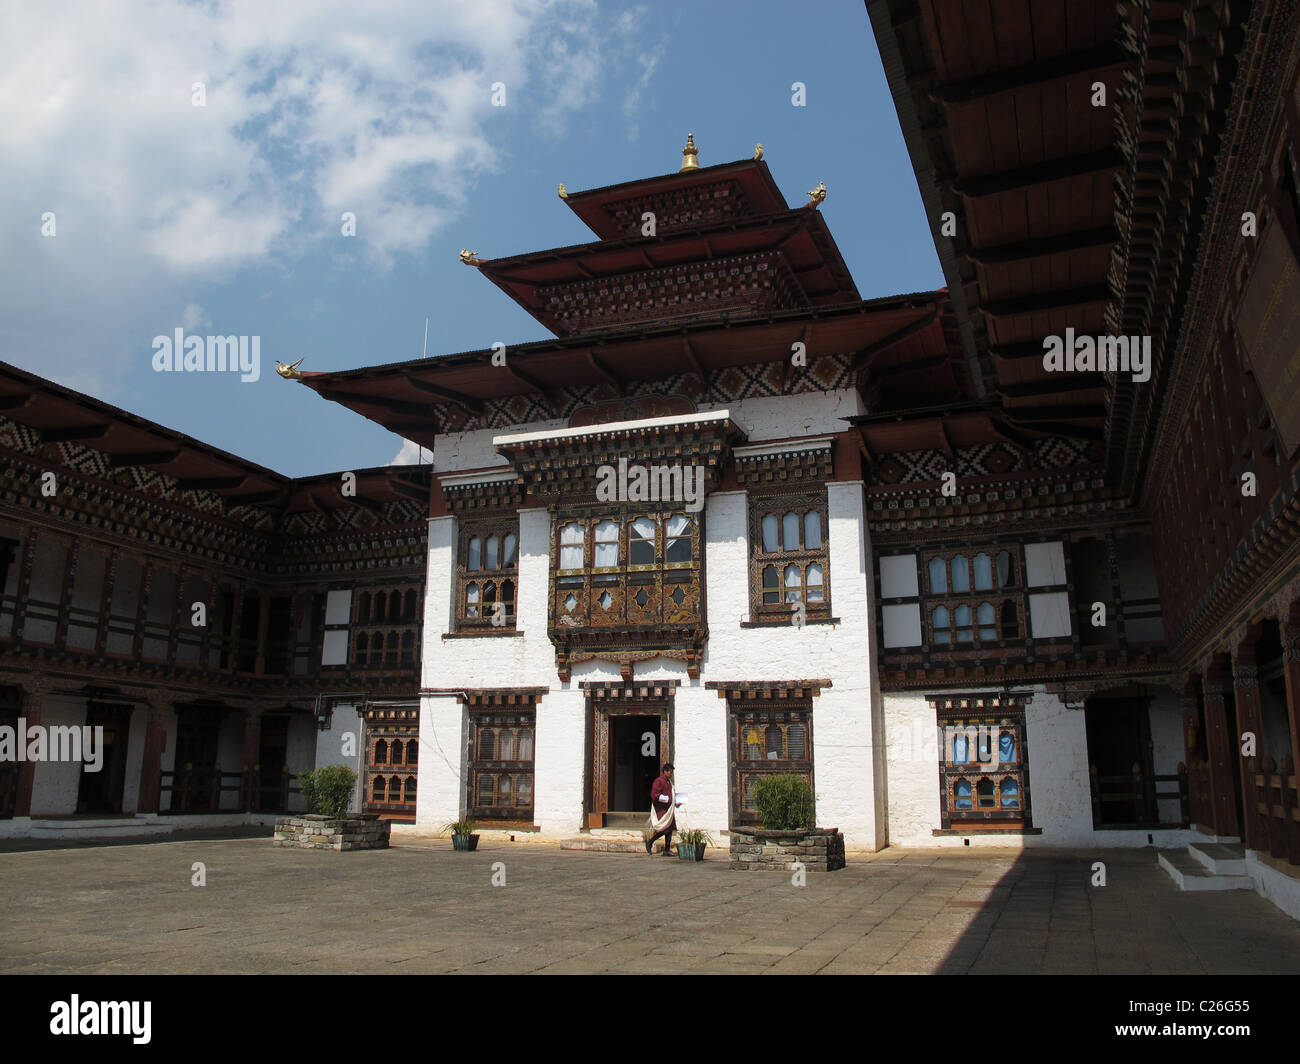 Courtyard of the Dzong in Trashi Yangtse, Northeast Bhutan Stock Photo